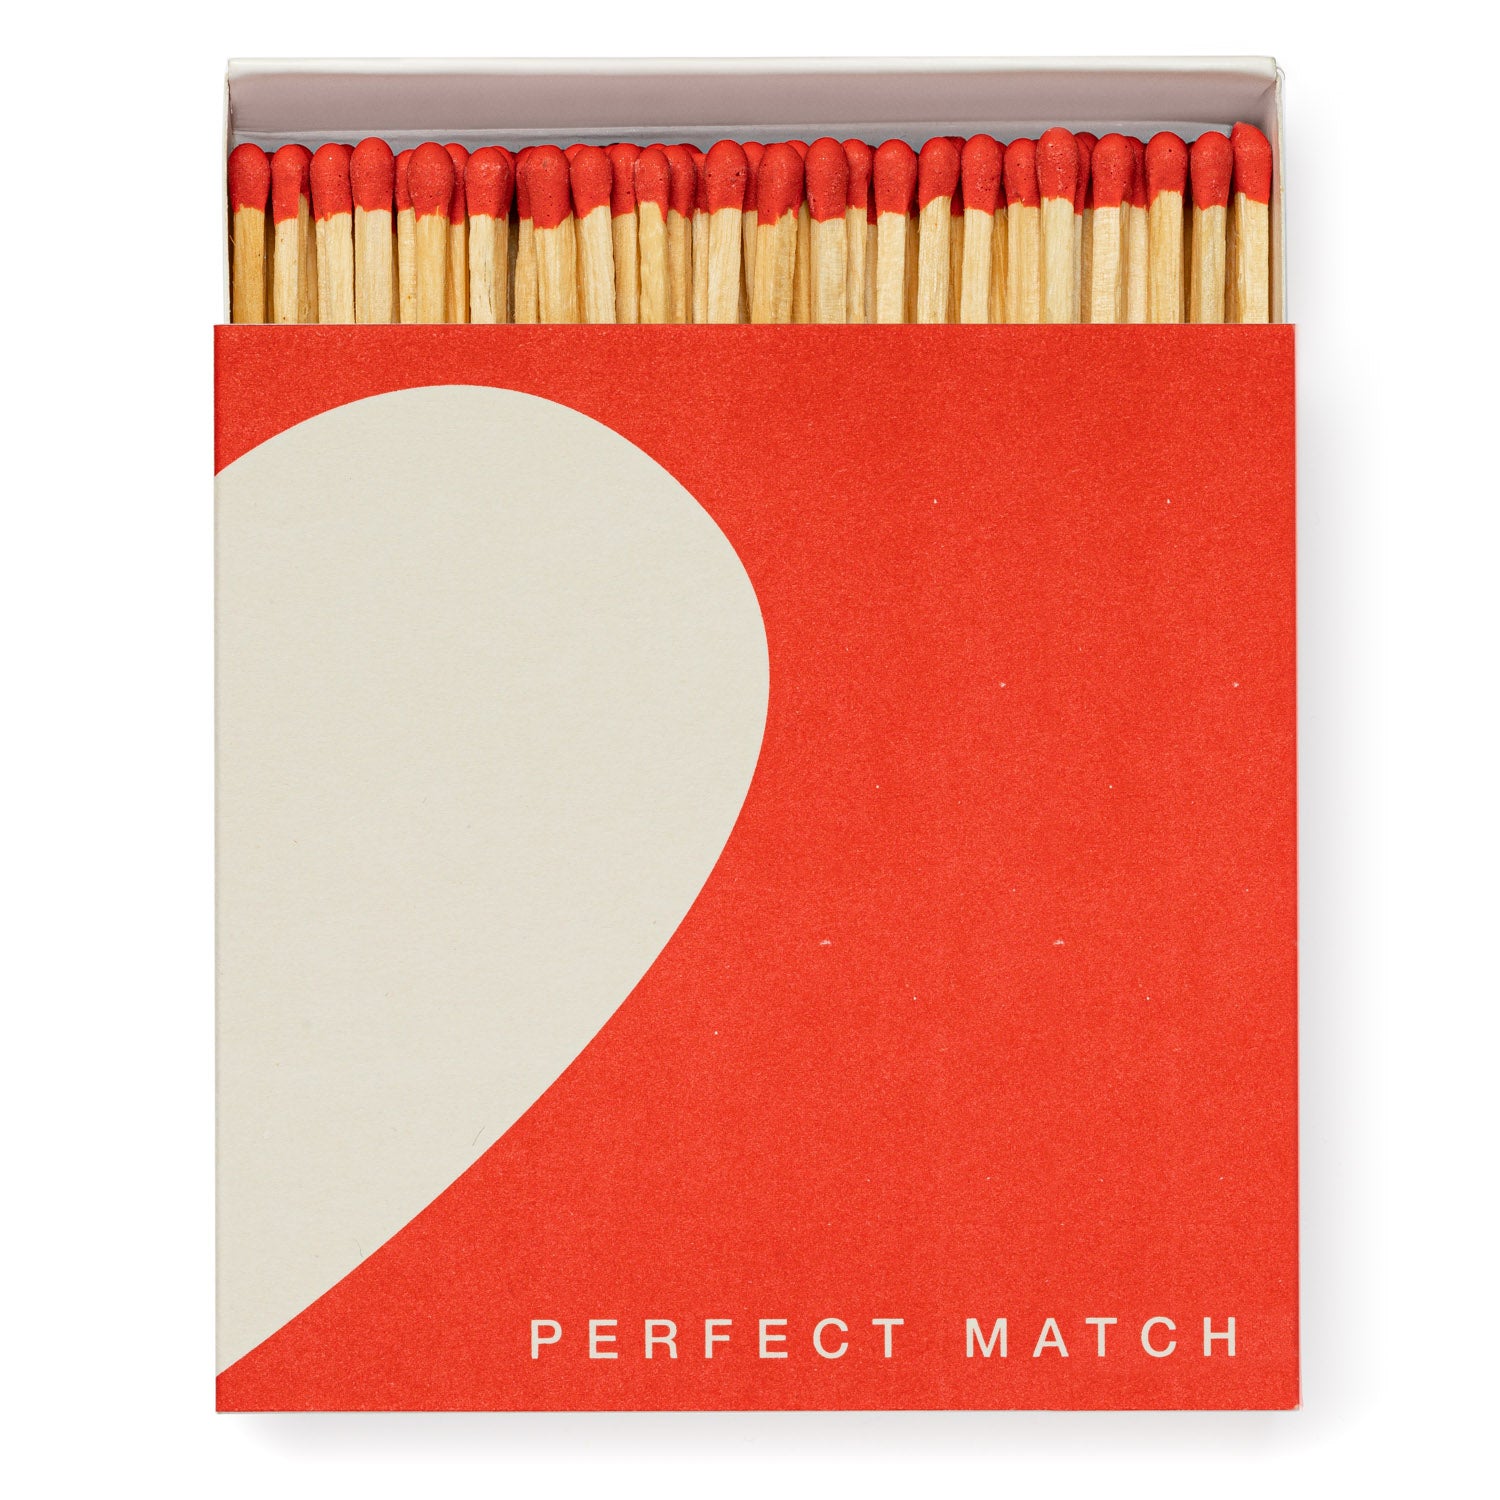 Allumettes Archivist Gallery - Perfect Match